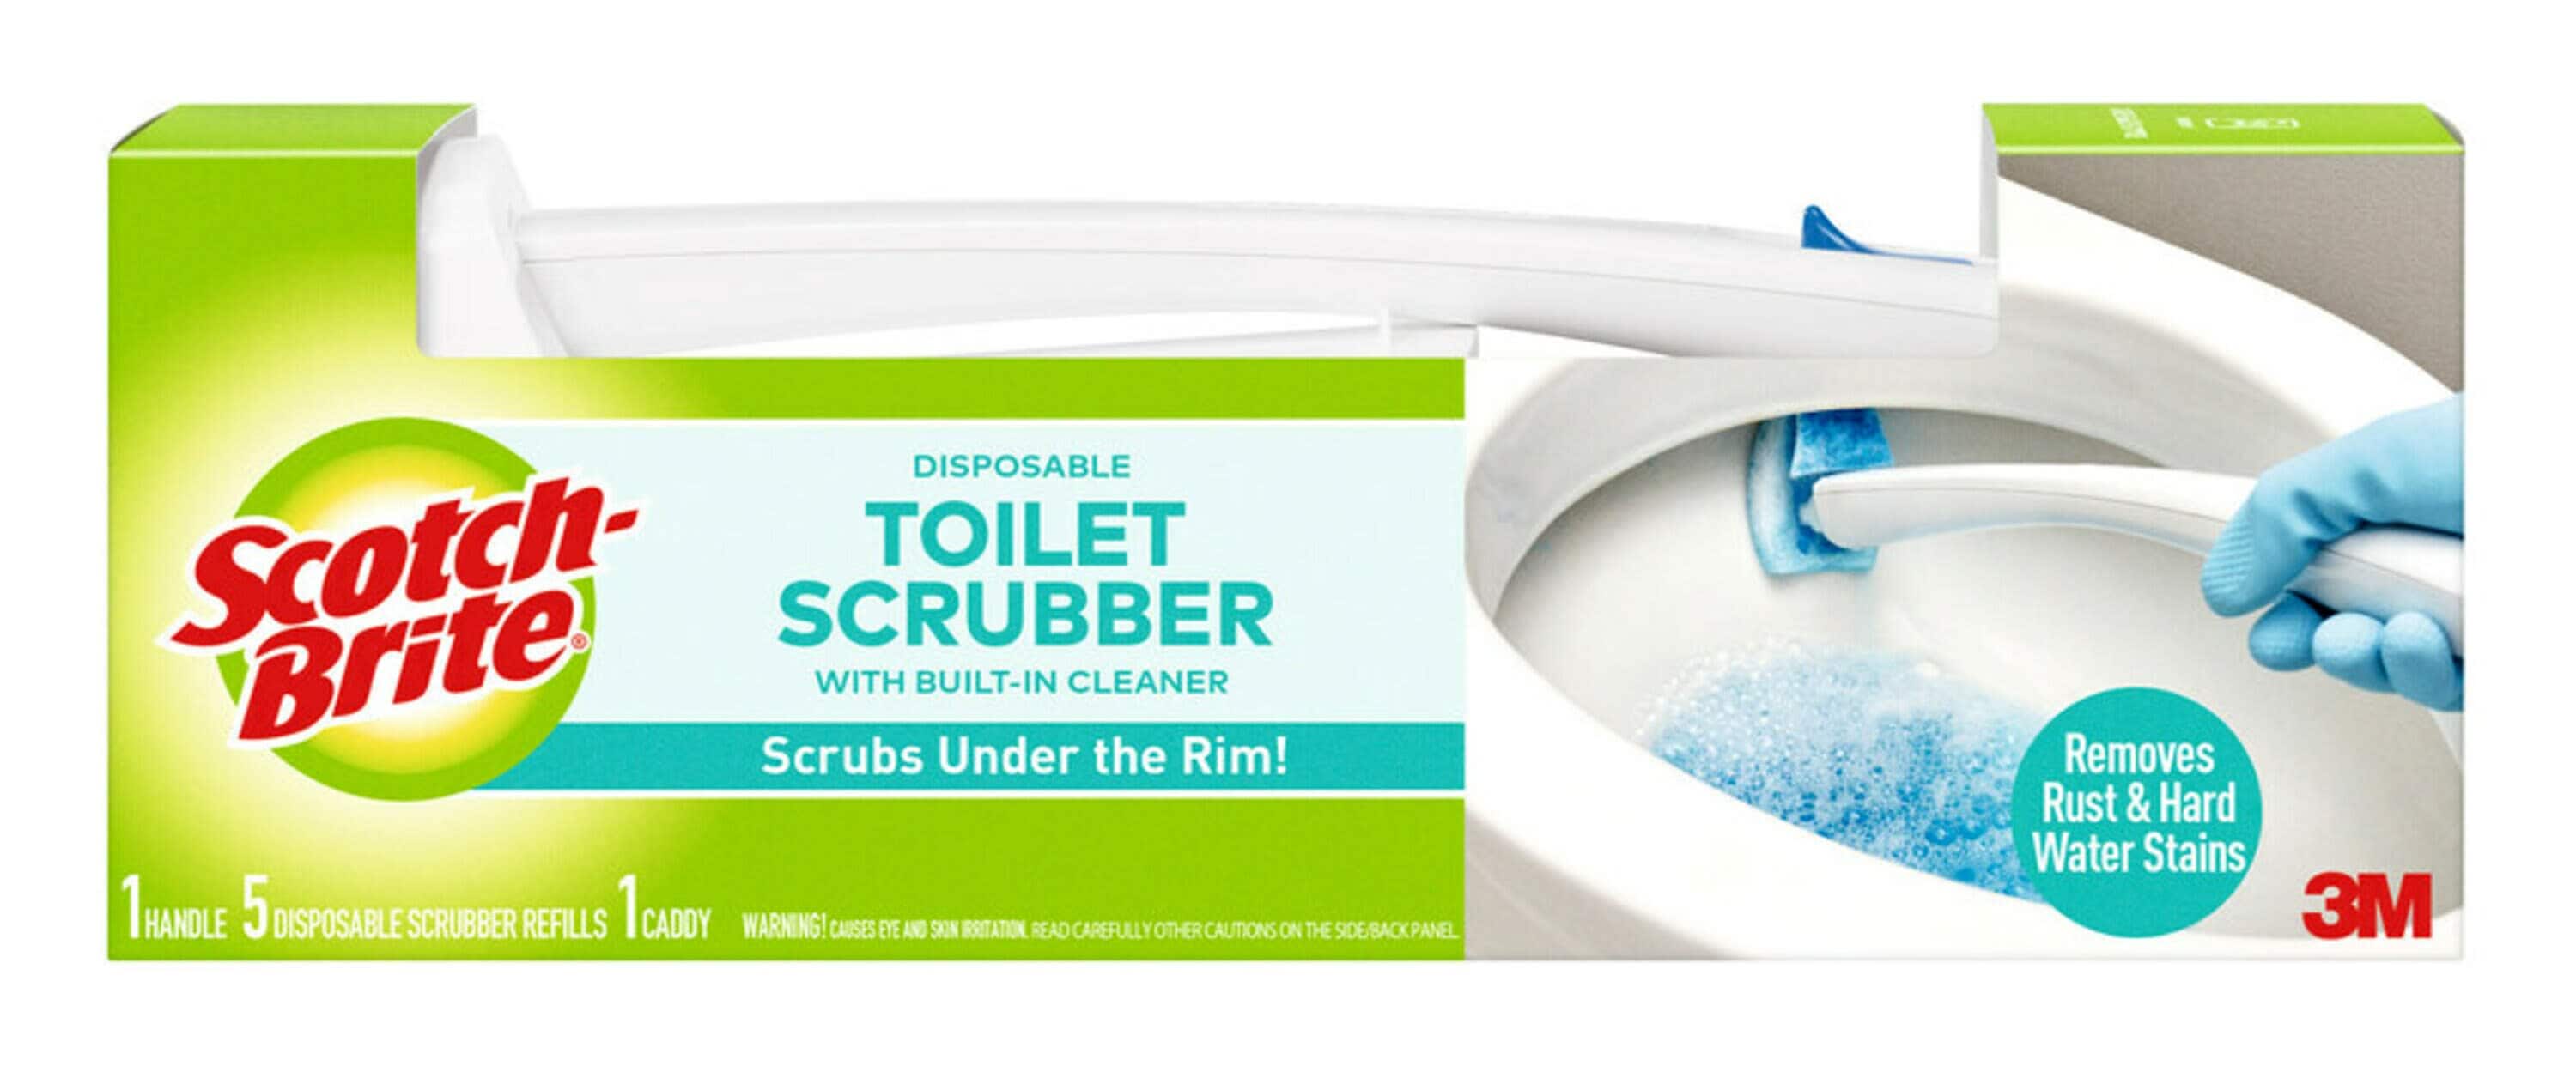 Scotch-Brite Basic Disposable Toilet Bowl Scrubber, 1 Handle, 1 Refill, Blue